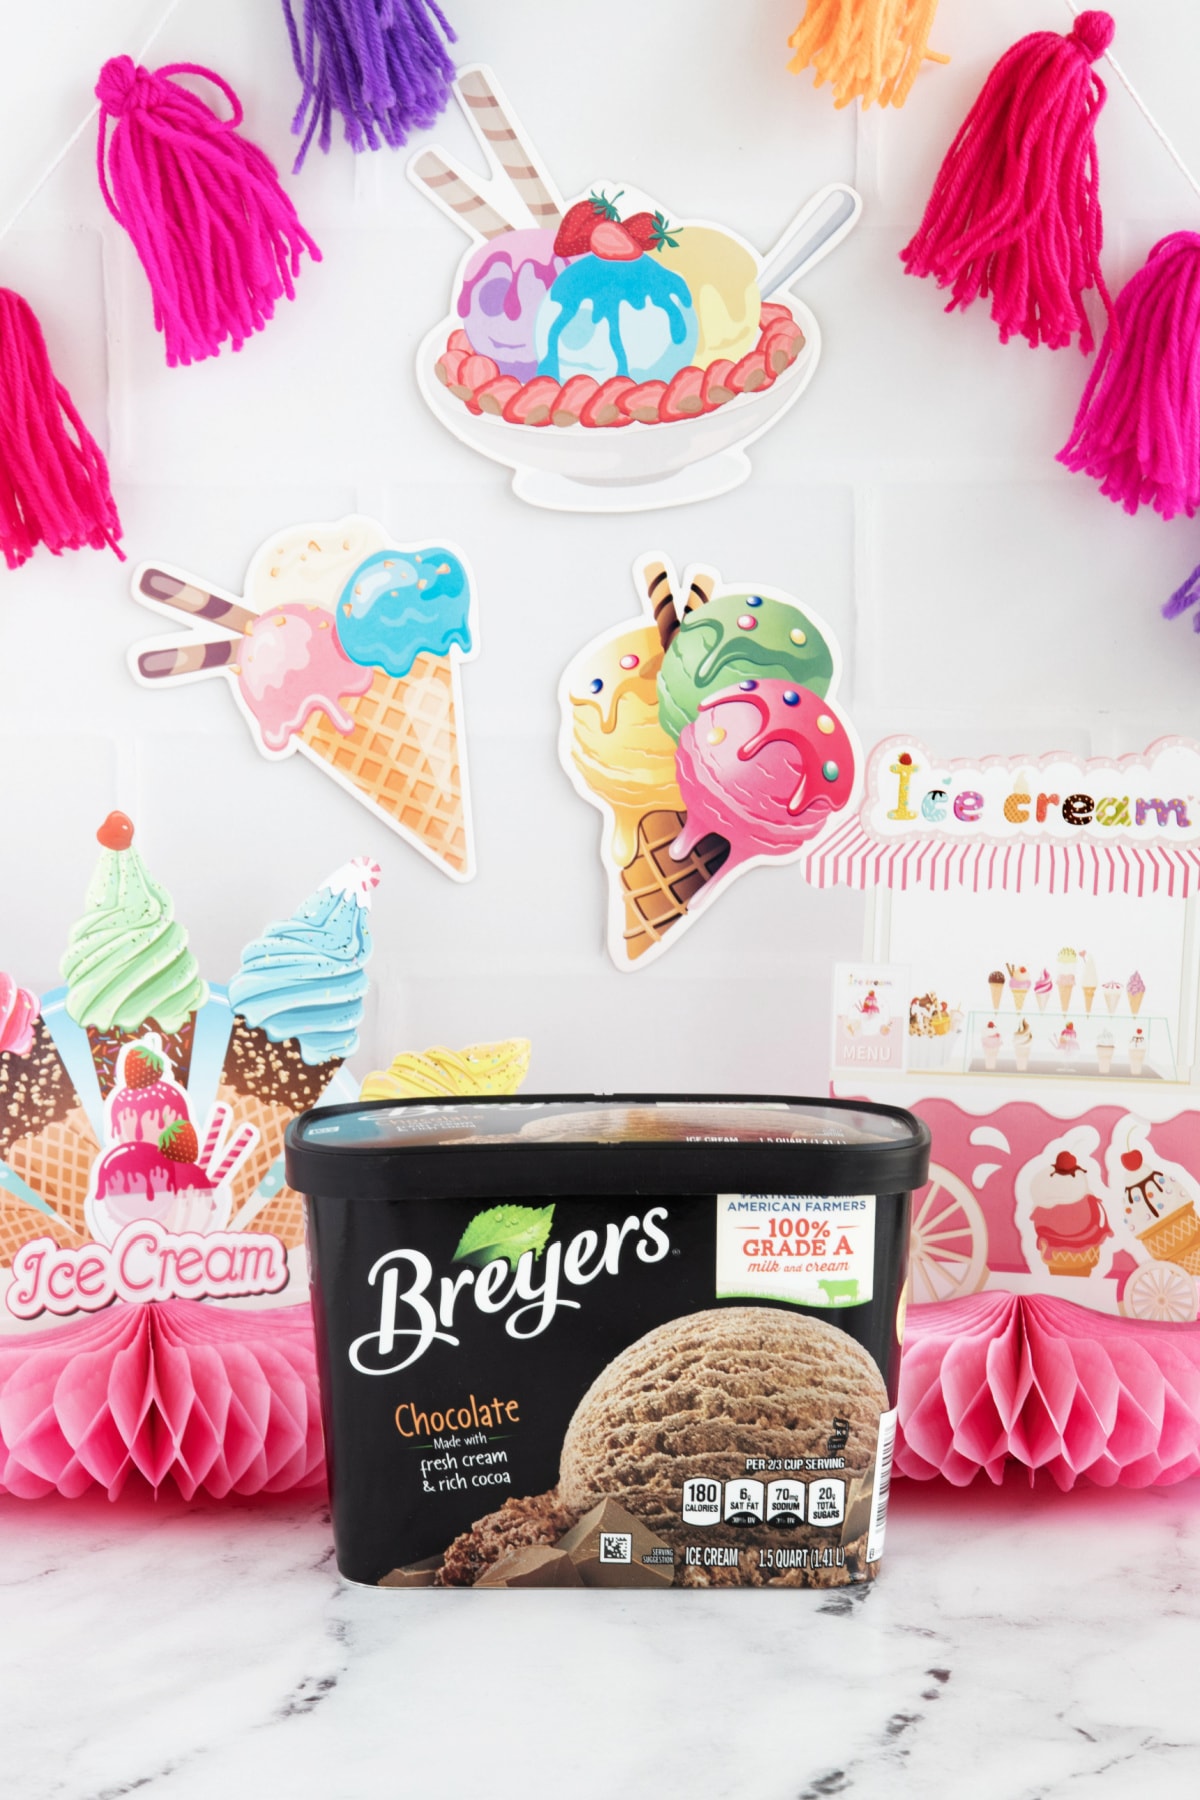 Carton of Breyers Ice Cream